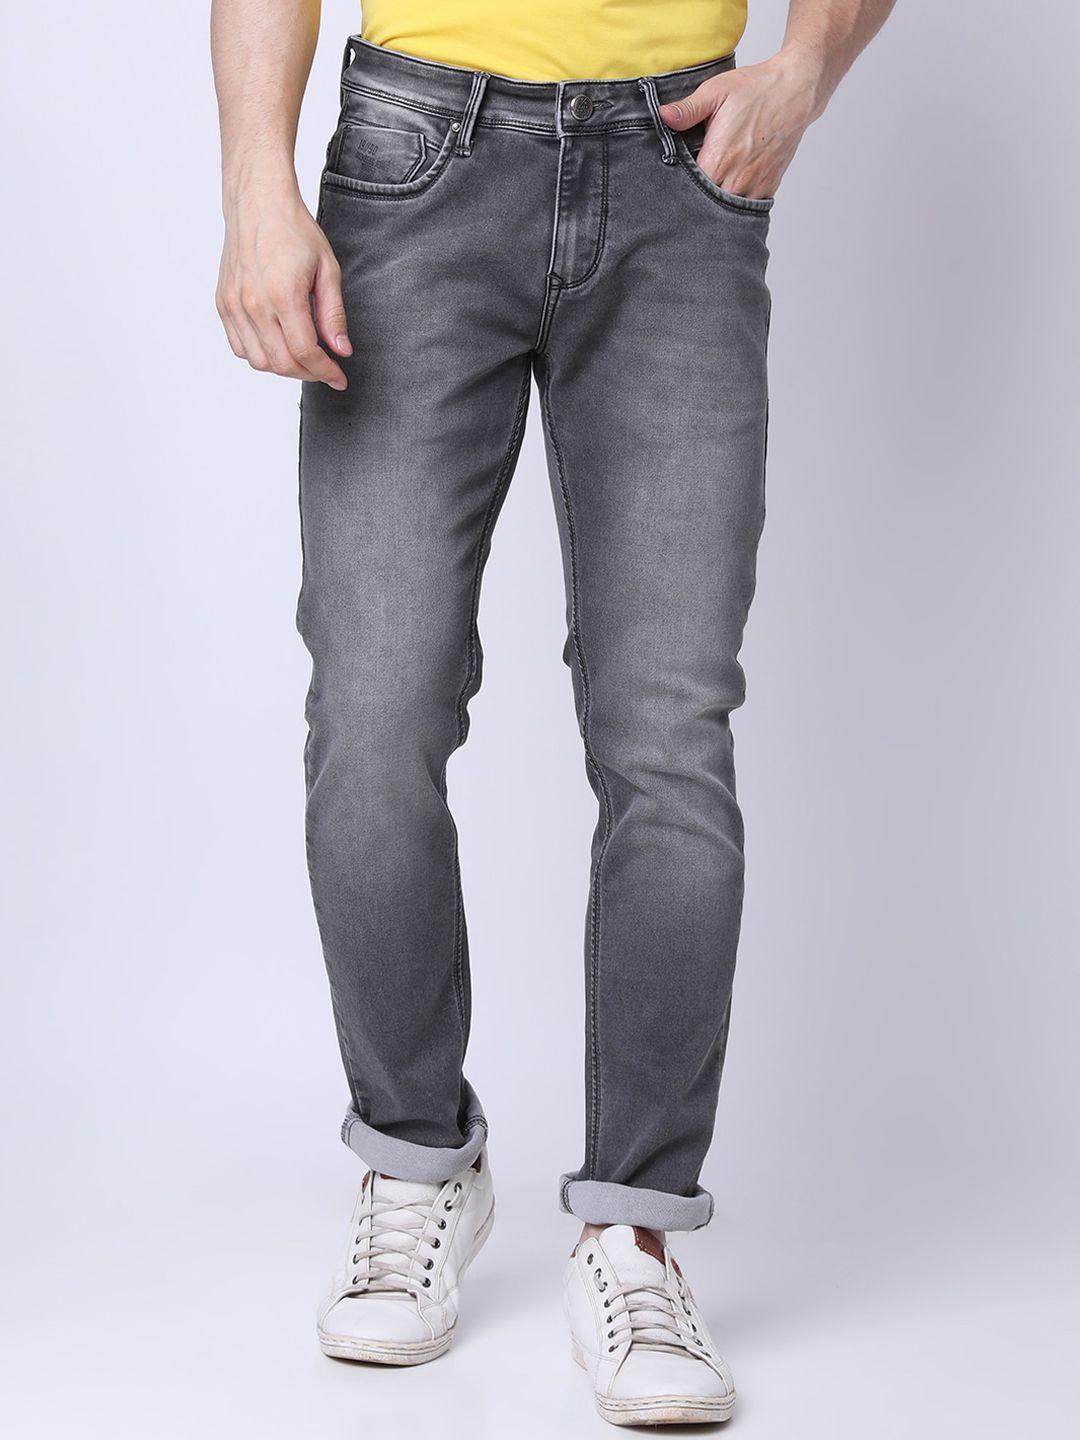 oxemberg-men-mid-rise-slim-fit-lean-clean-look-heavy-fade-jeans